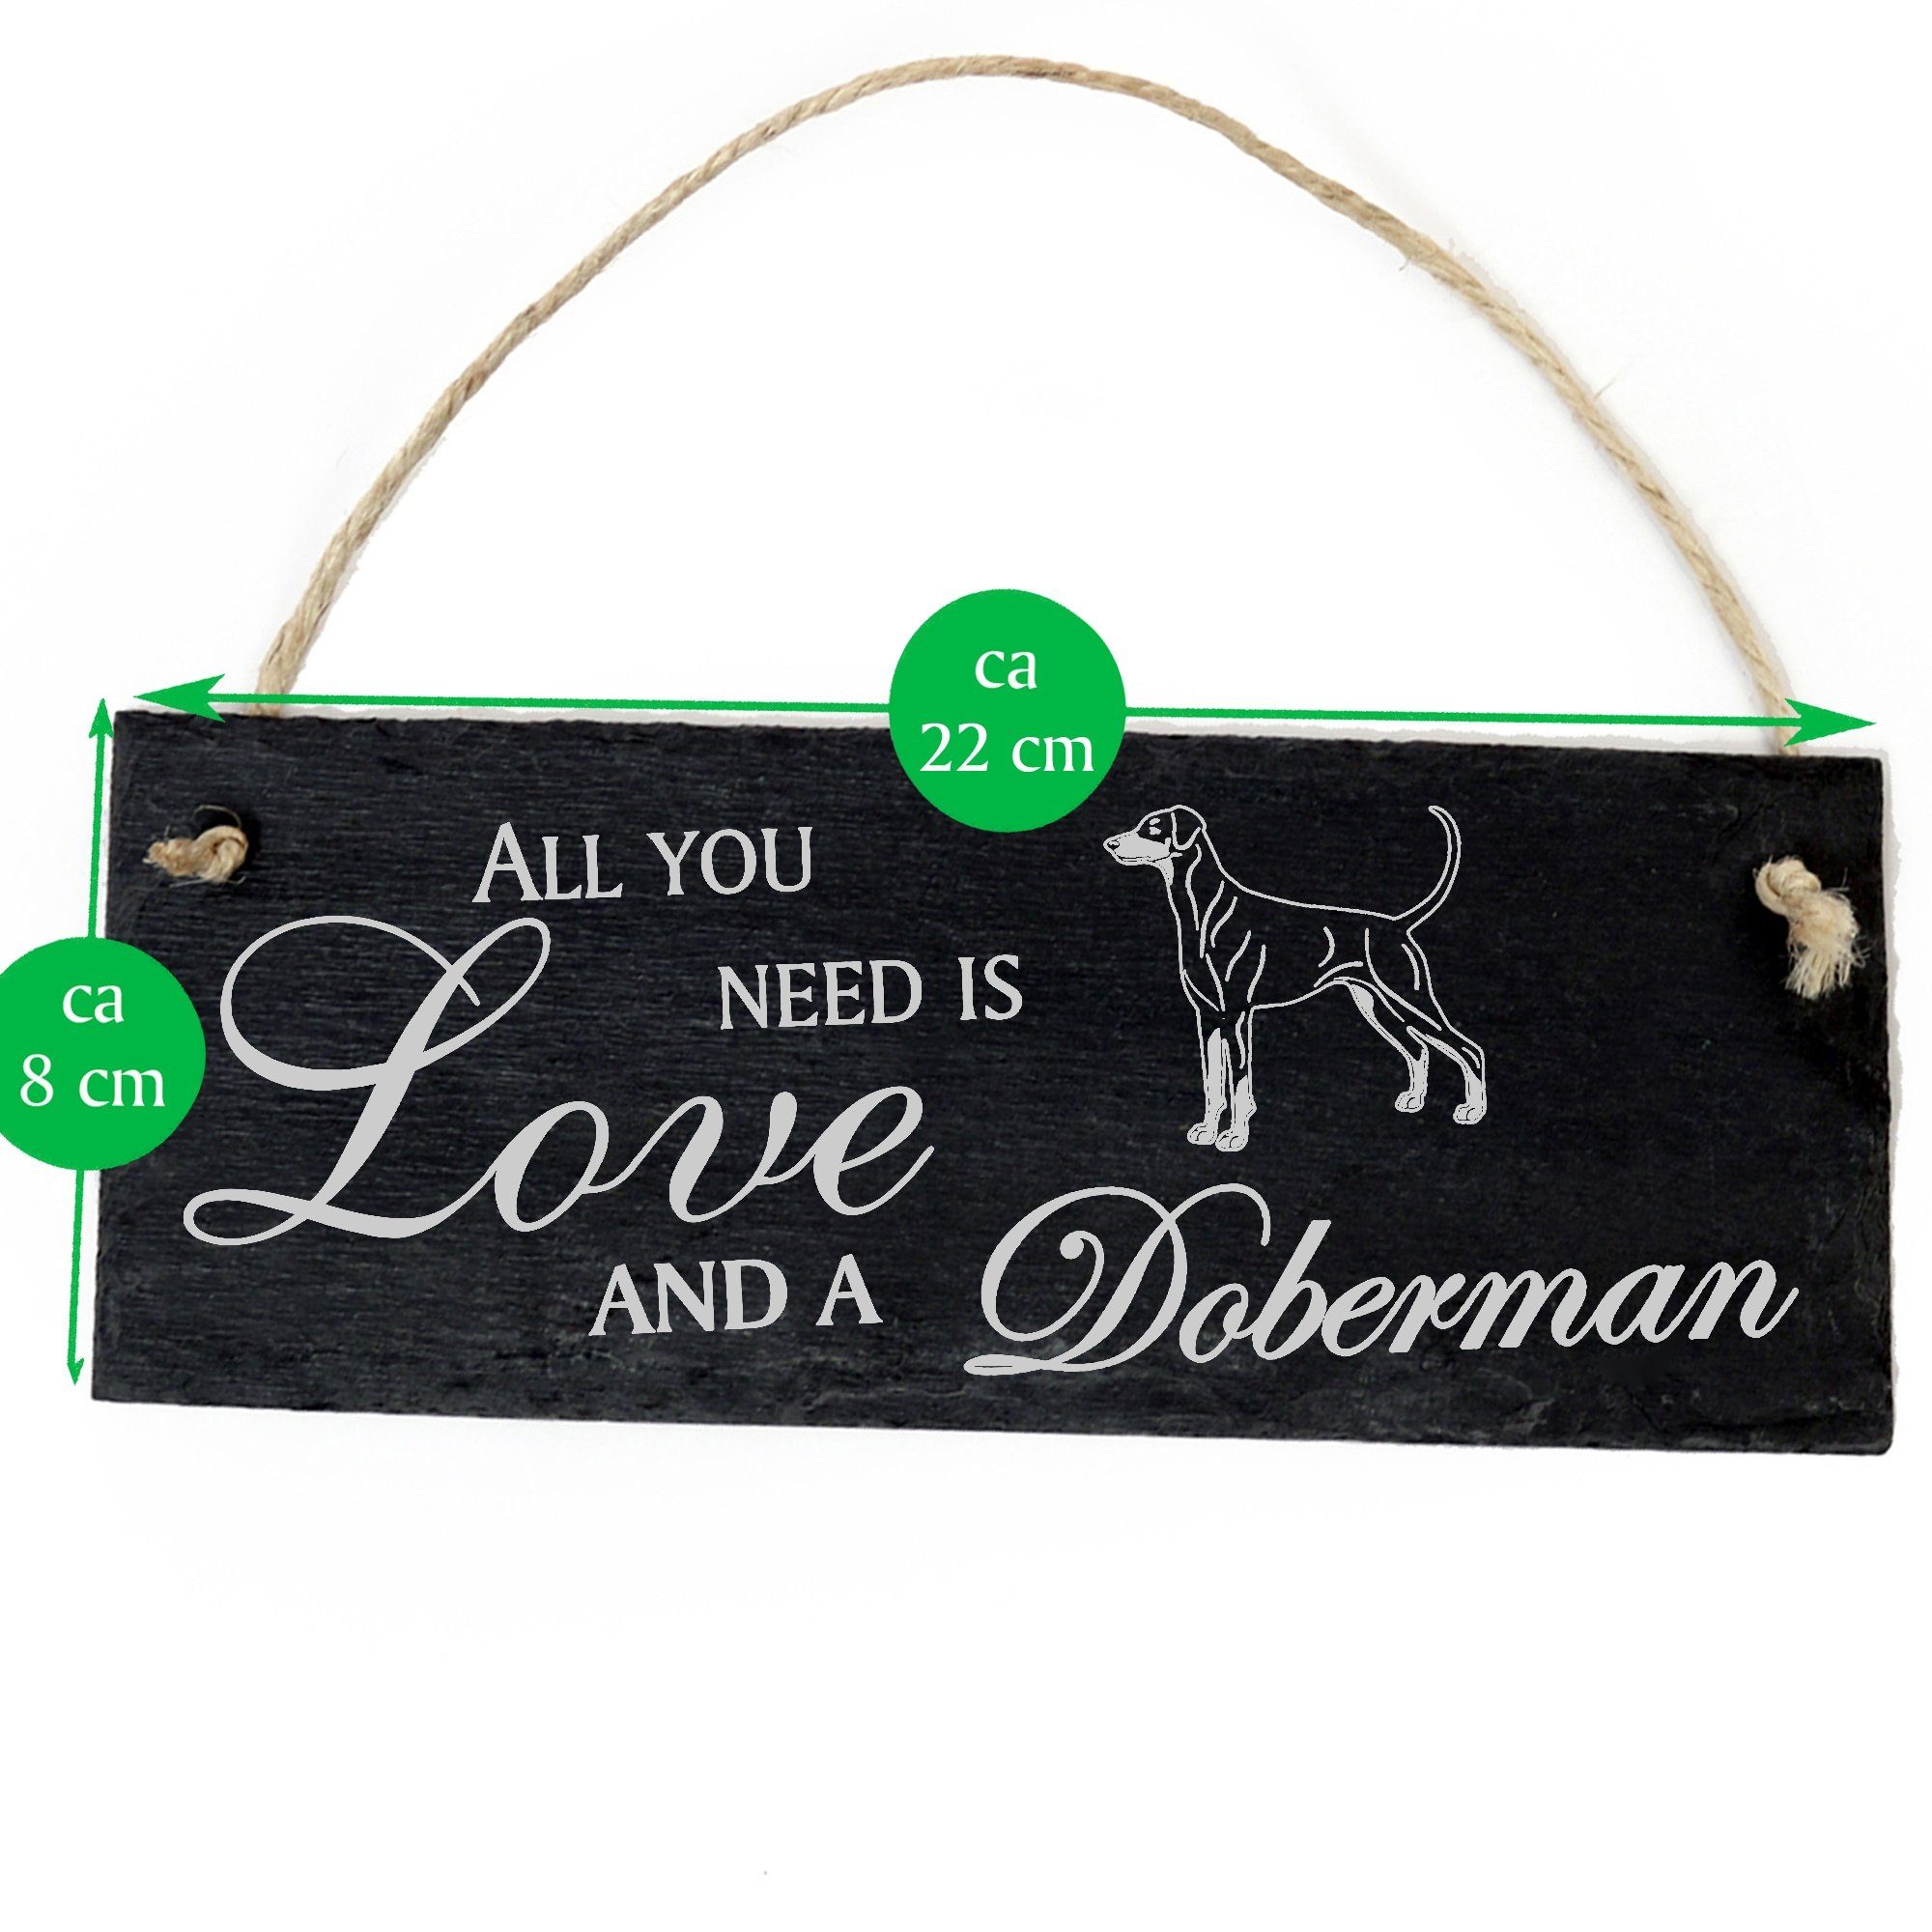 Dekolando Hängedekoration Dobermann 22x8cm All Love need you a and is Doberman